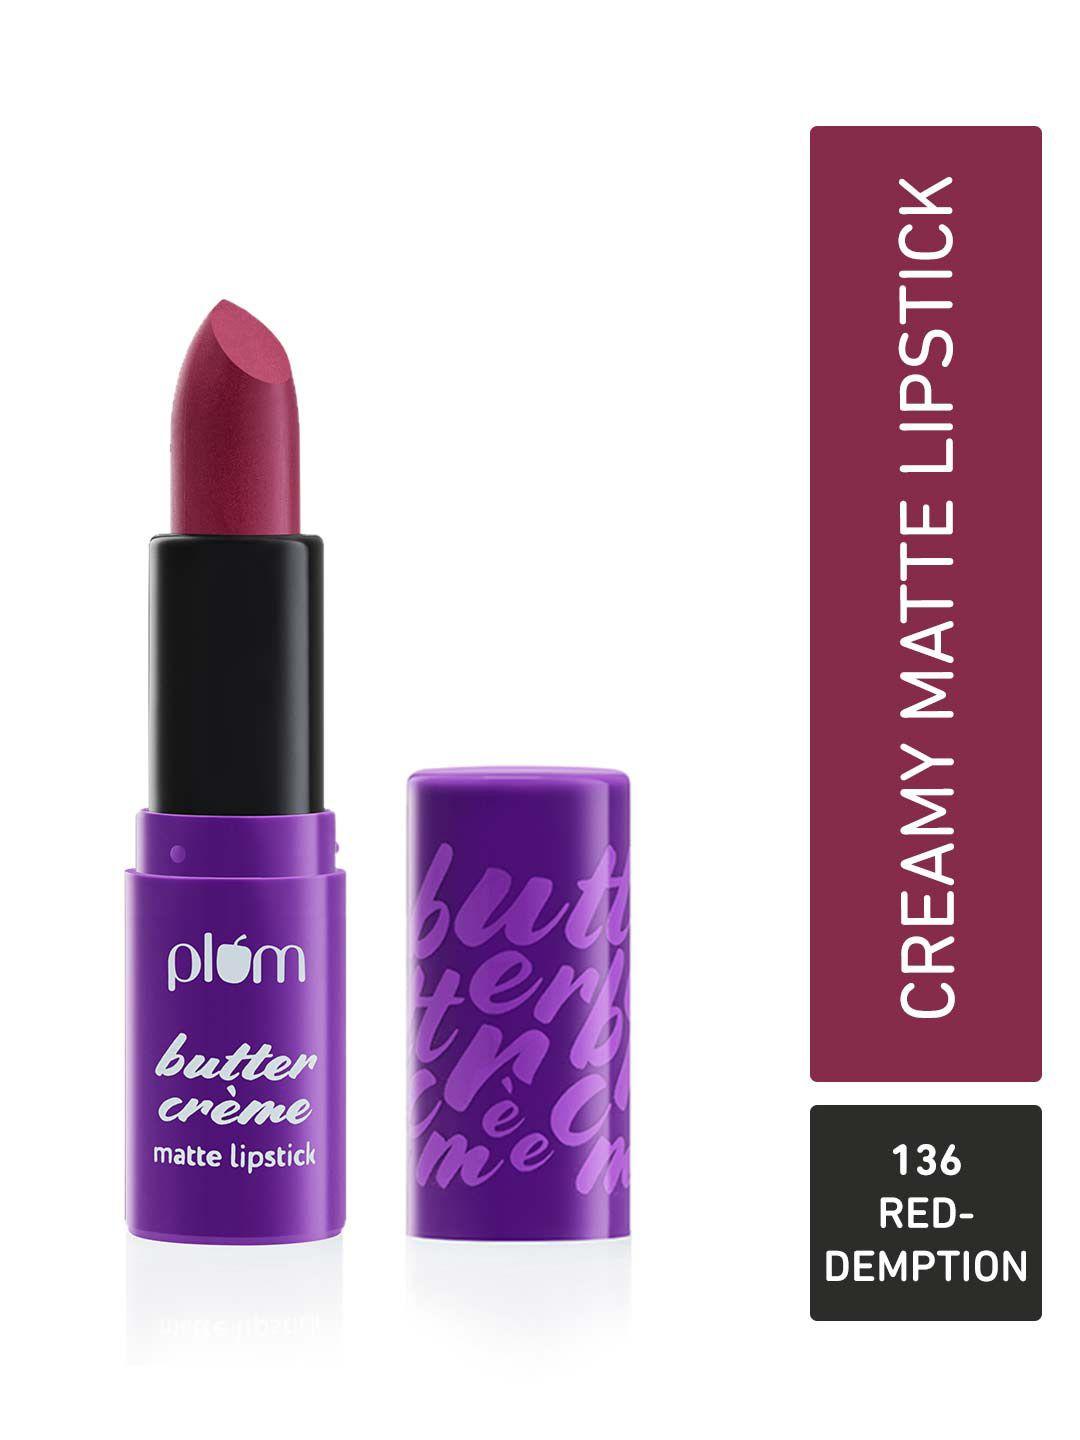 plum butter creme highly pigmented lightweight matte lipstick - red-demption 136